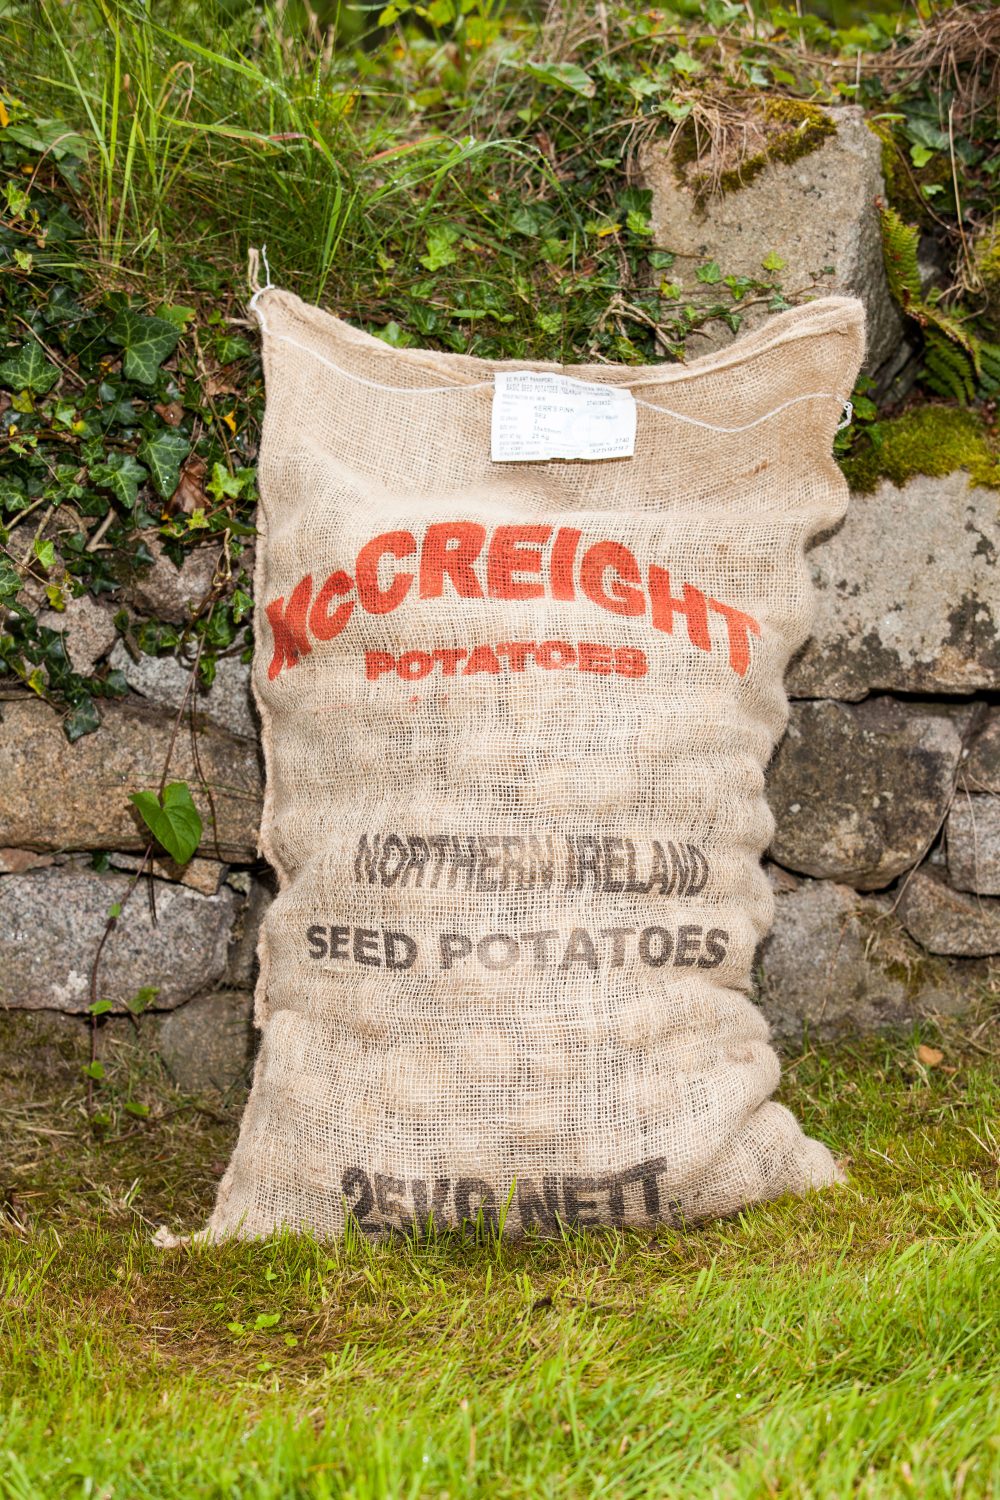 25 kg bag of seed potatoes